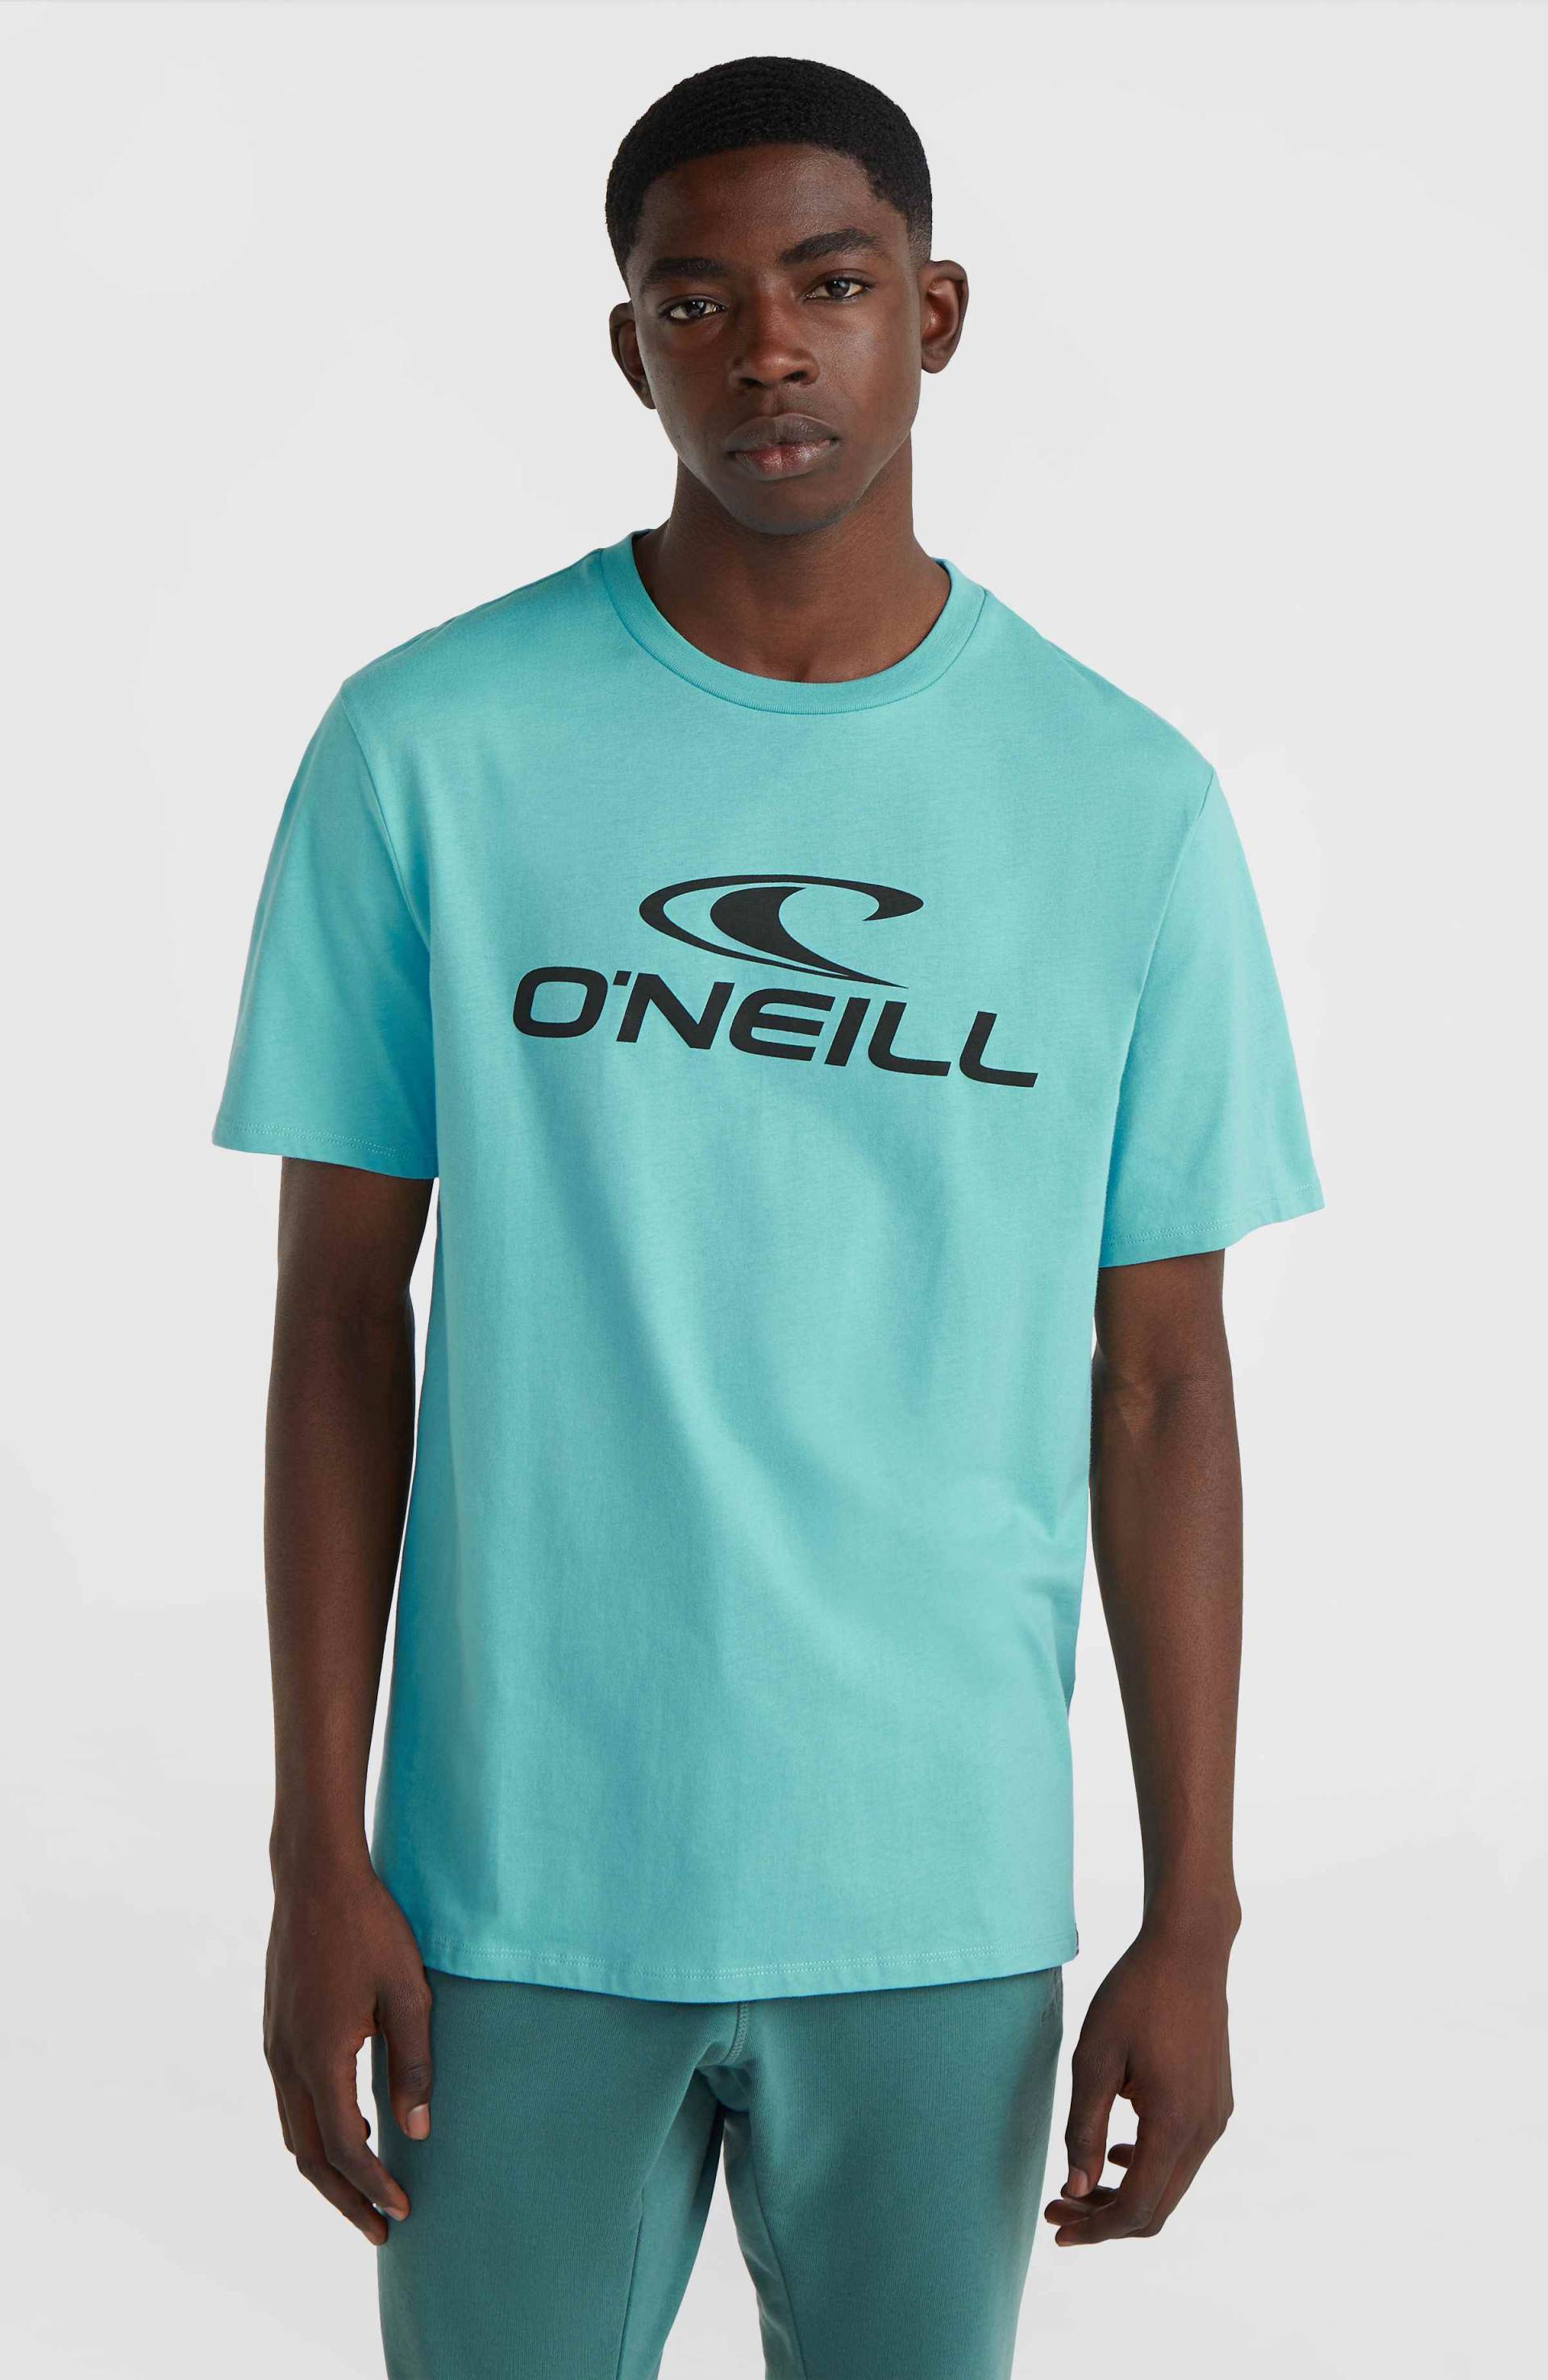 O'Neill T-Shirt »O'NEILL LOGO T-SHIRT« von O'Neill